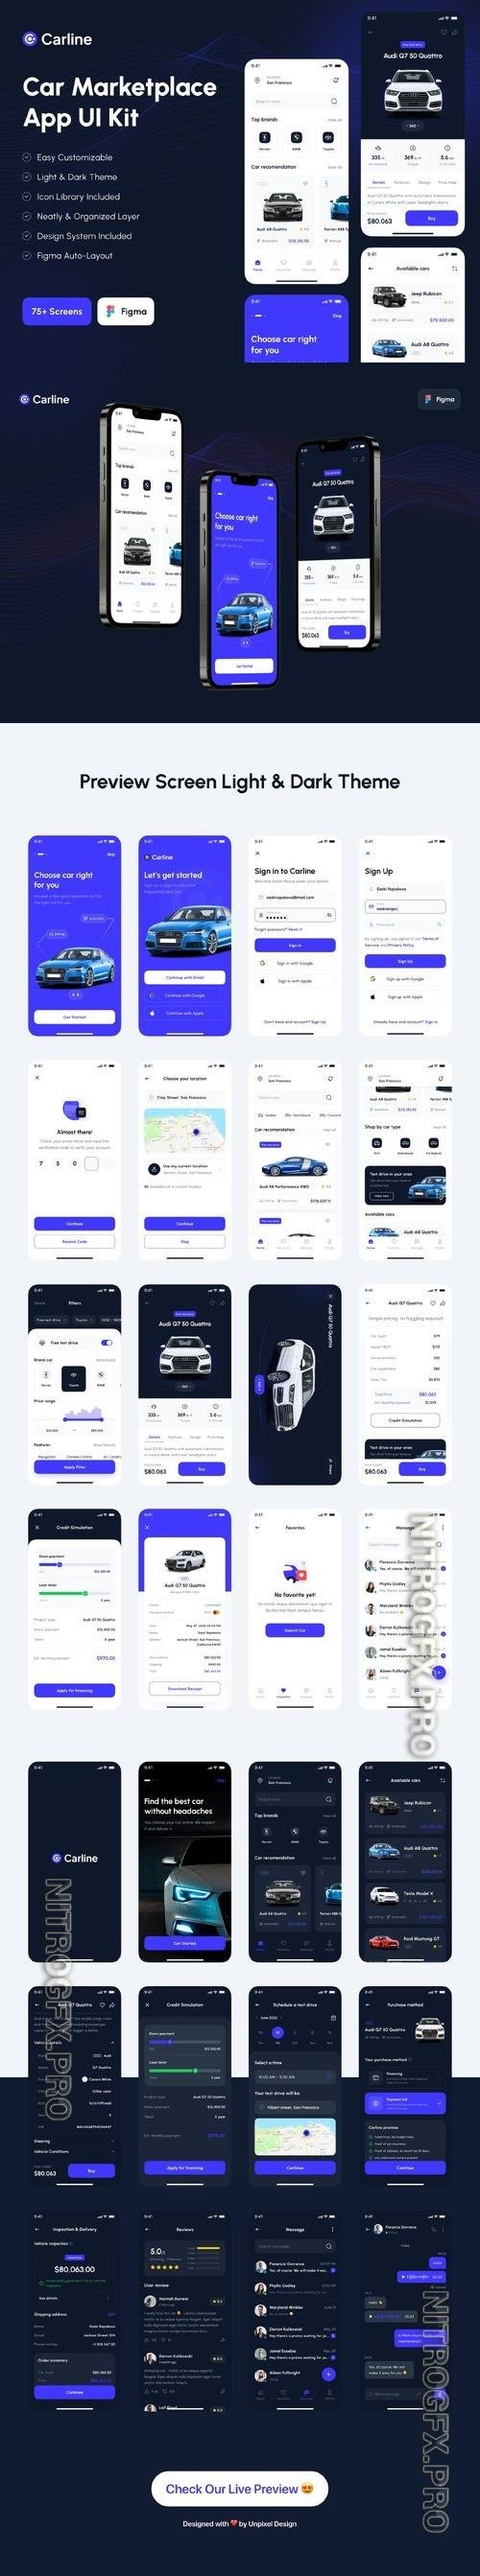 UI8 - Carline - Car Marketplace App UI Kit